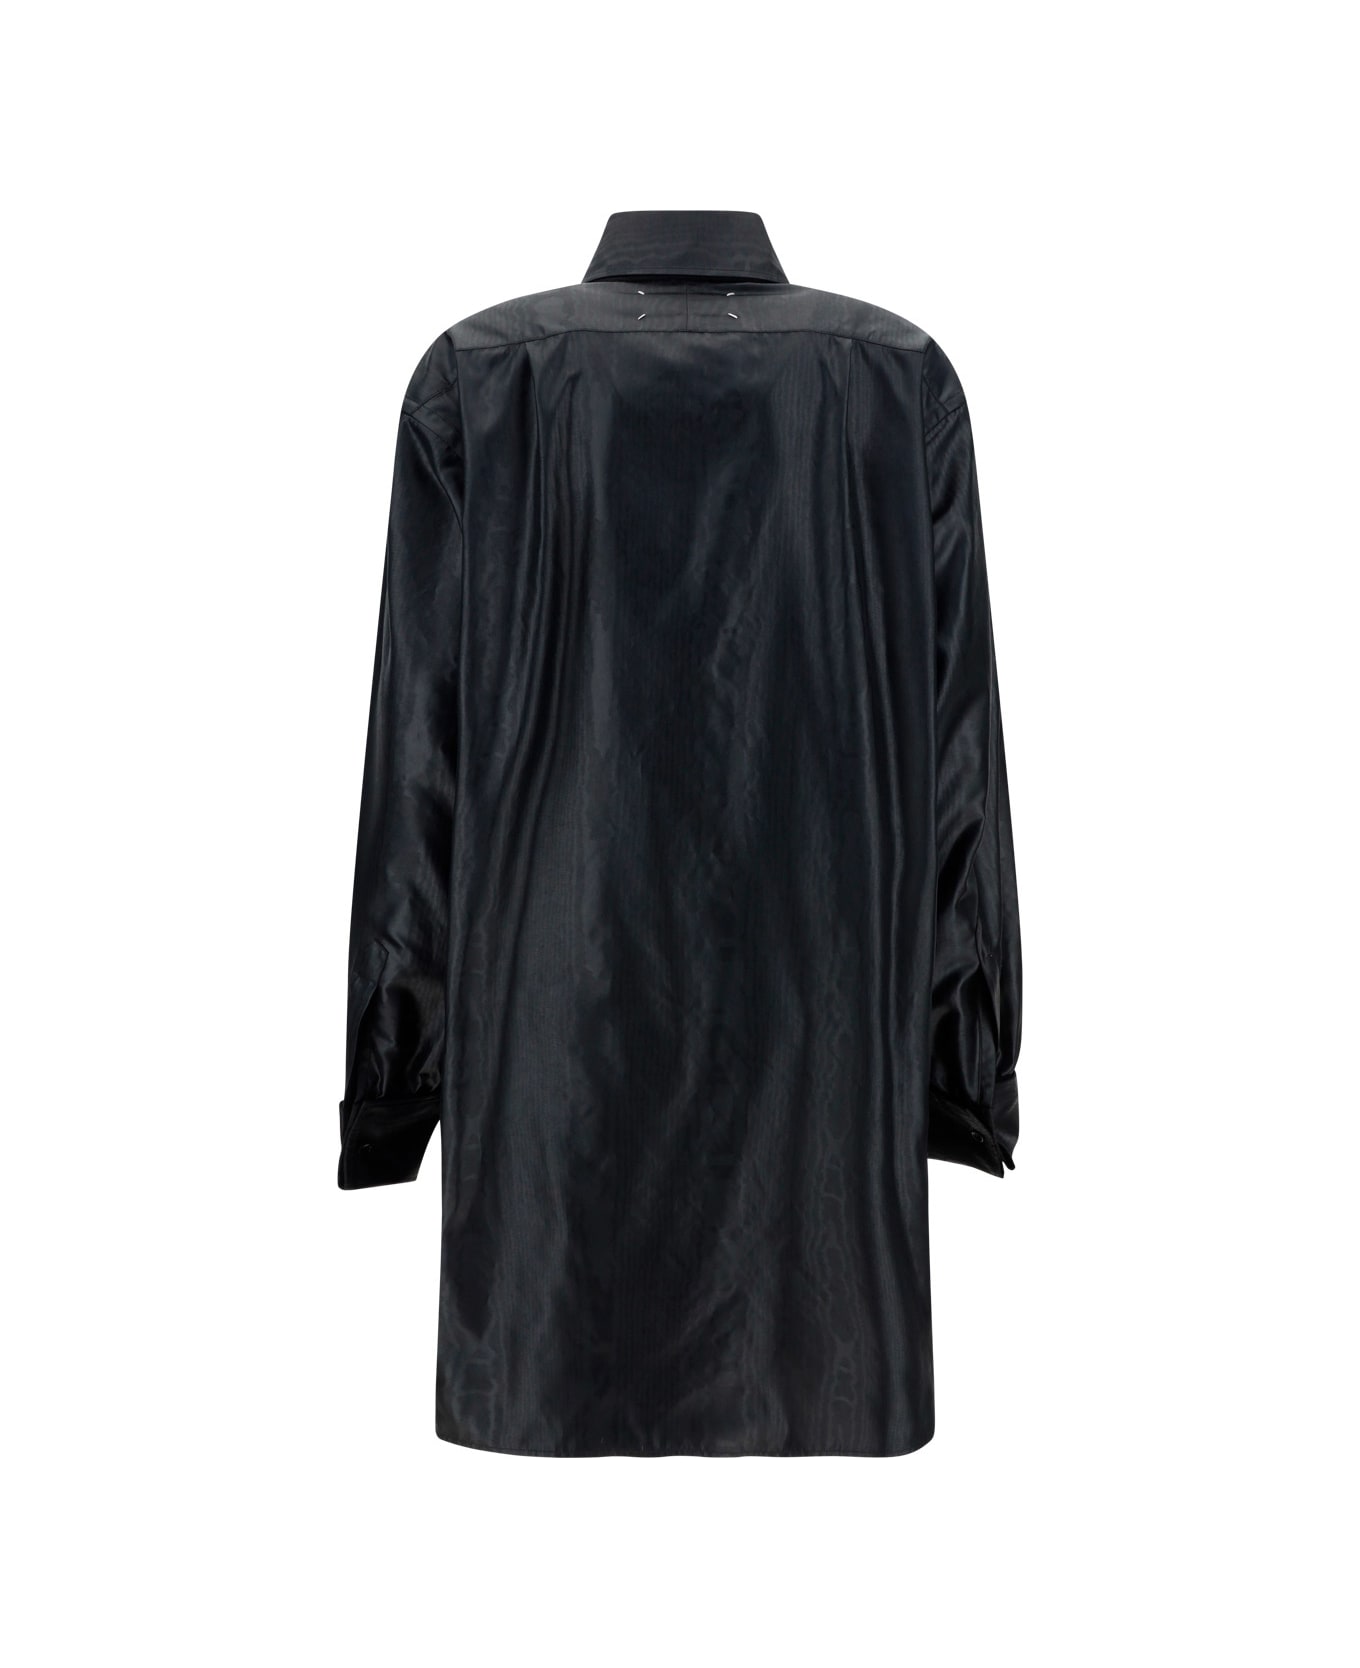 Maison Margiela Long Shirt With Classic Collar - Black